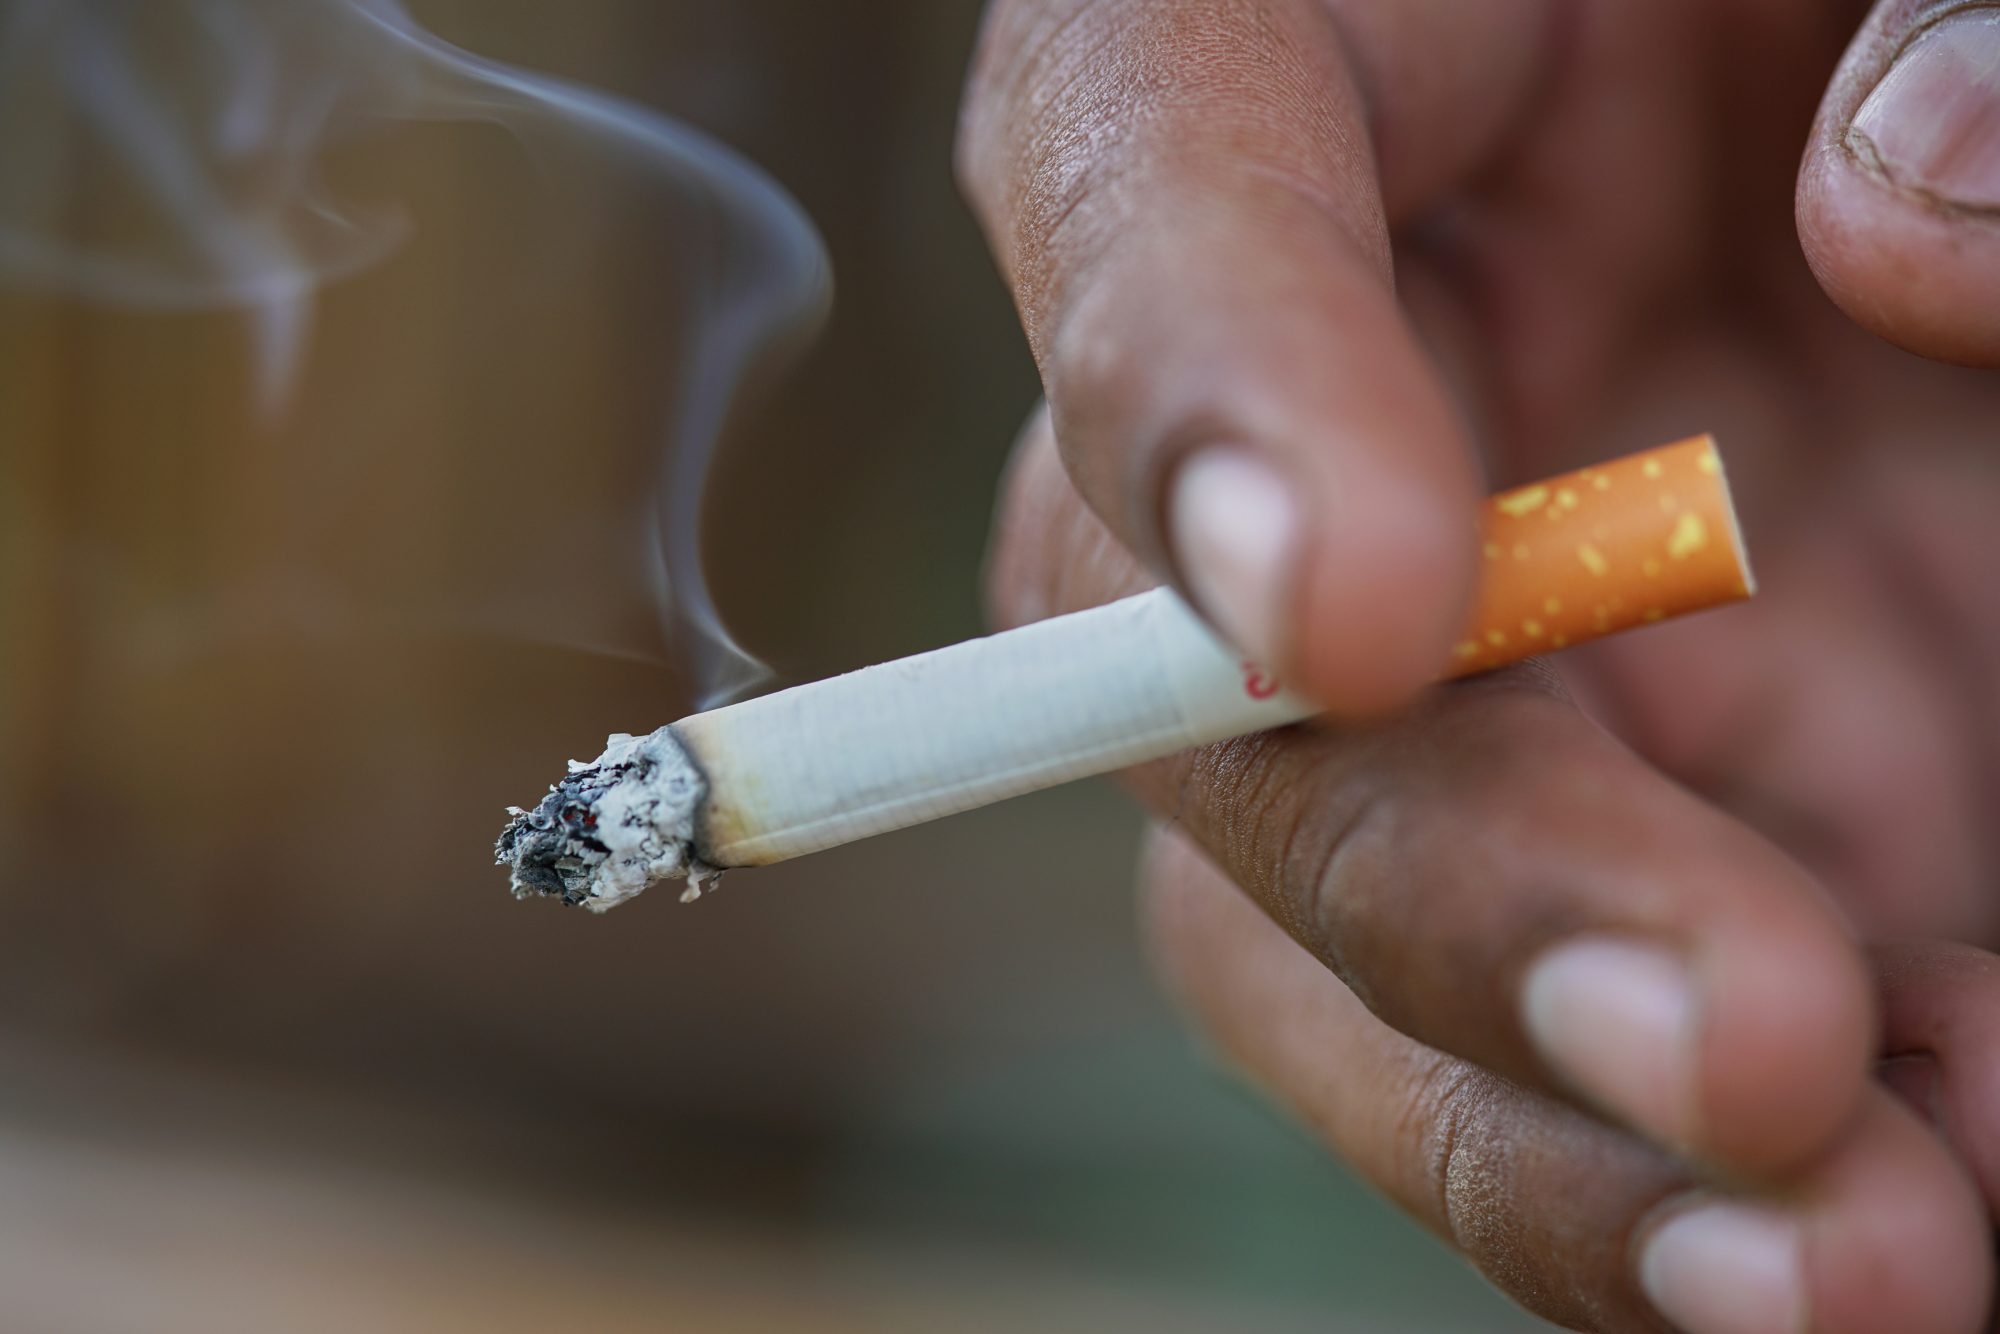 Smoking both ecigs & tobacco cigarettes increases risk of respiratory